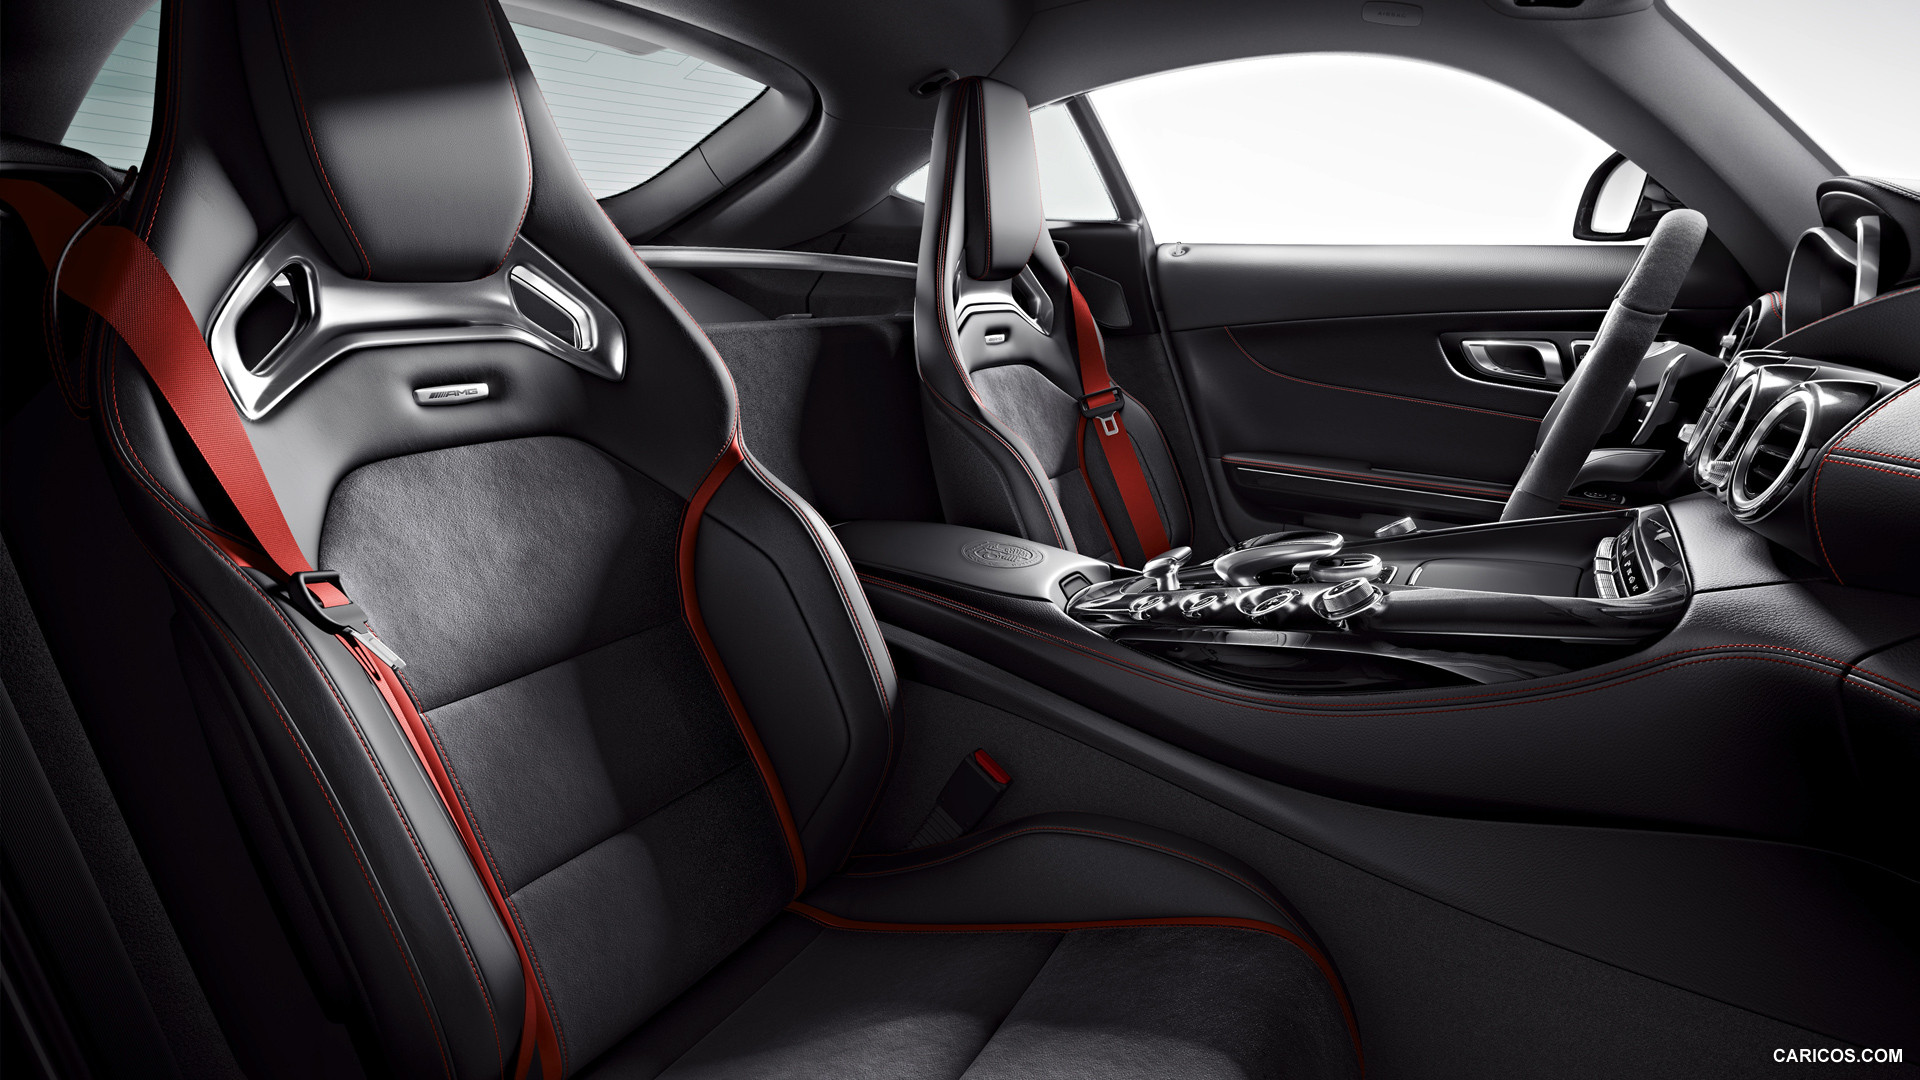  - AMG Performance Seats (Nappa Leather / DINAMICA Microfibre Black) - Interior, #8 of 13